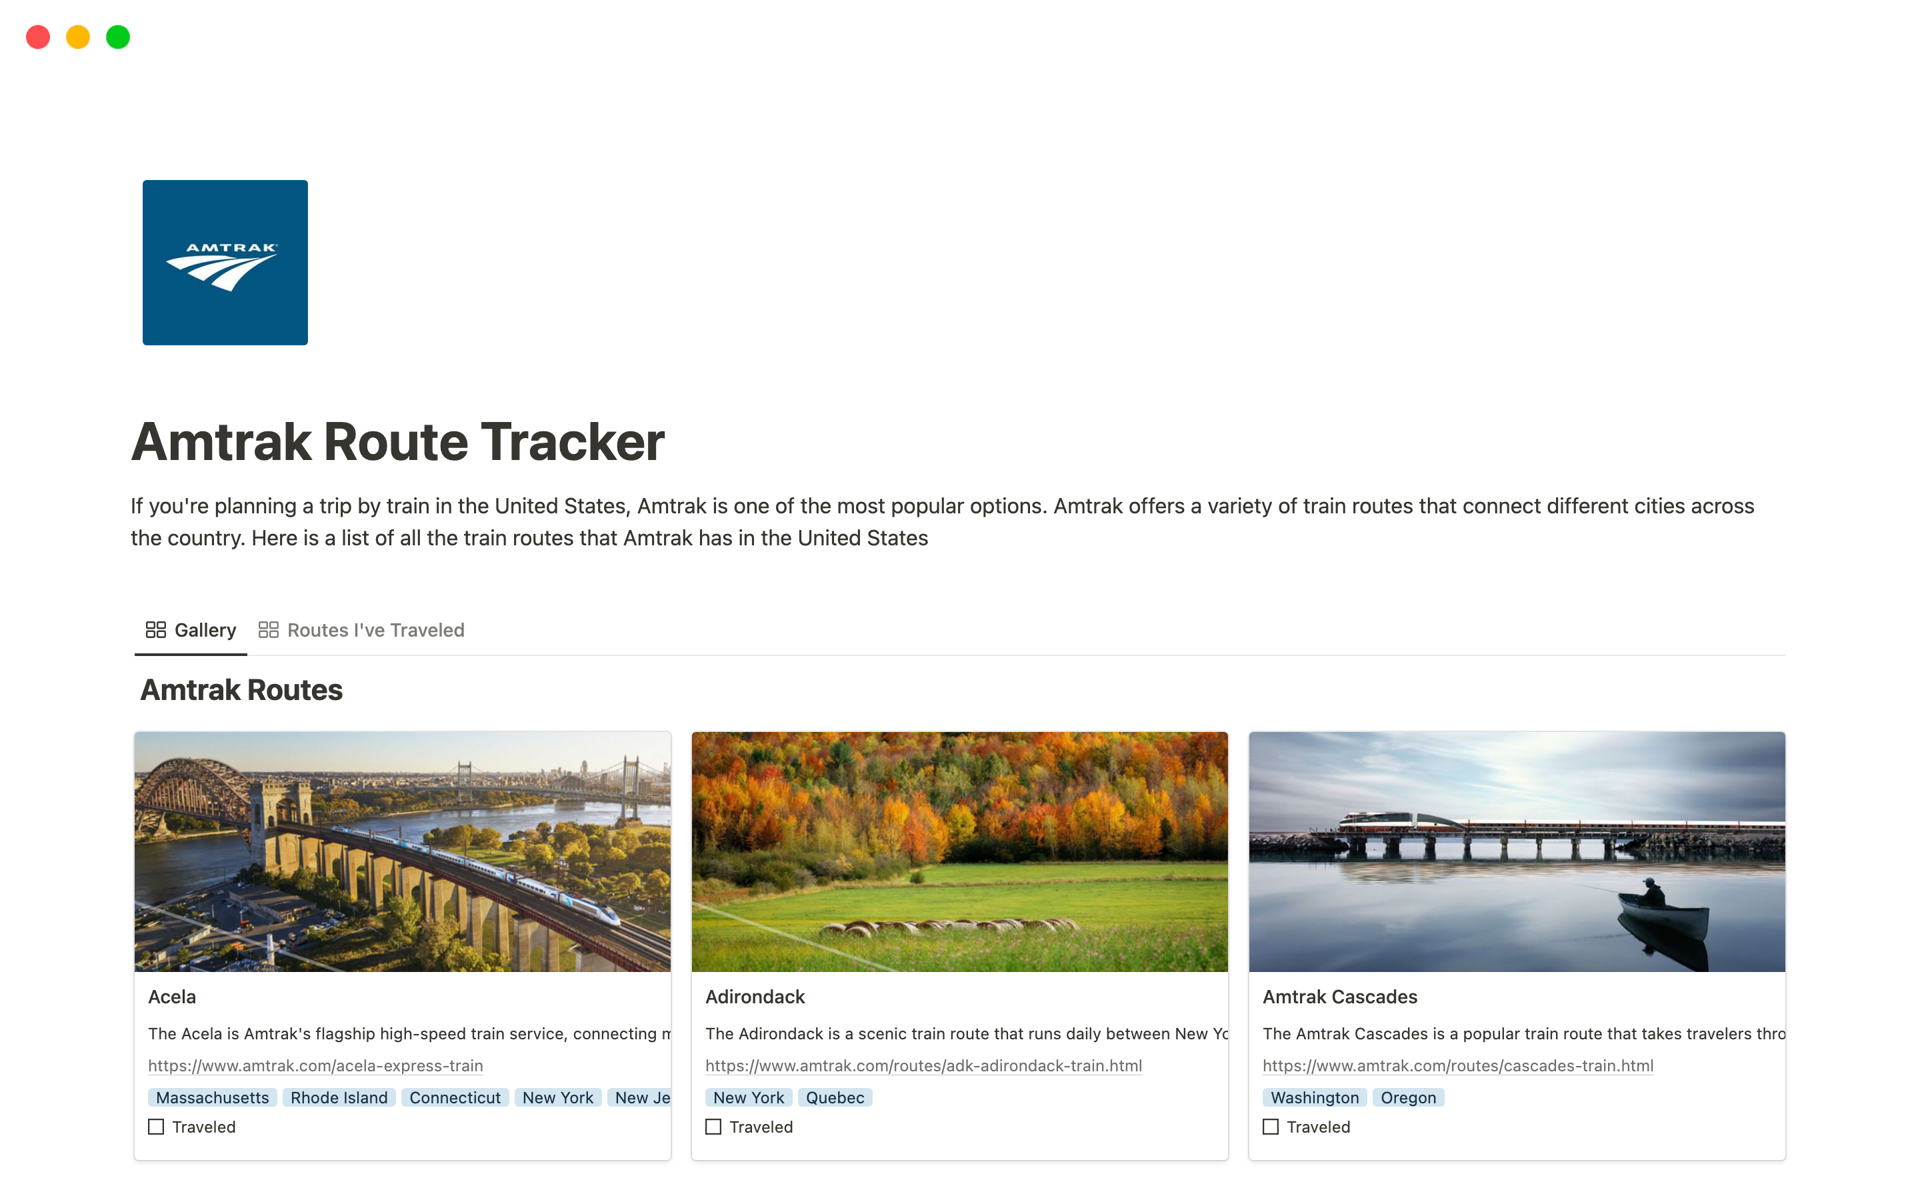 Track all trips you've taken on Amtrak